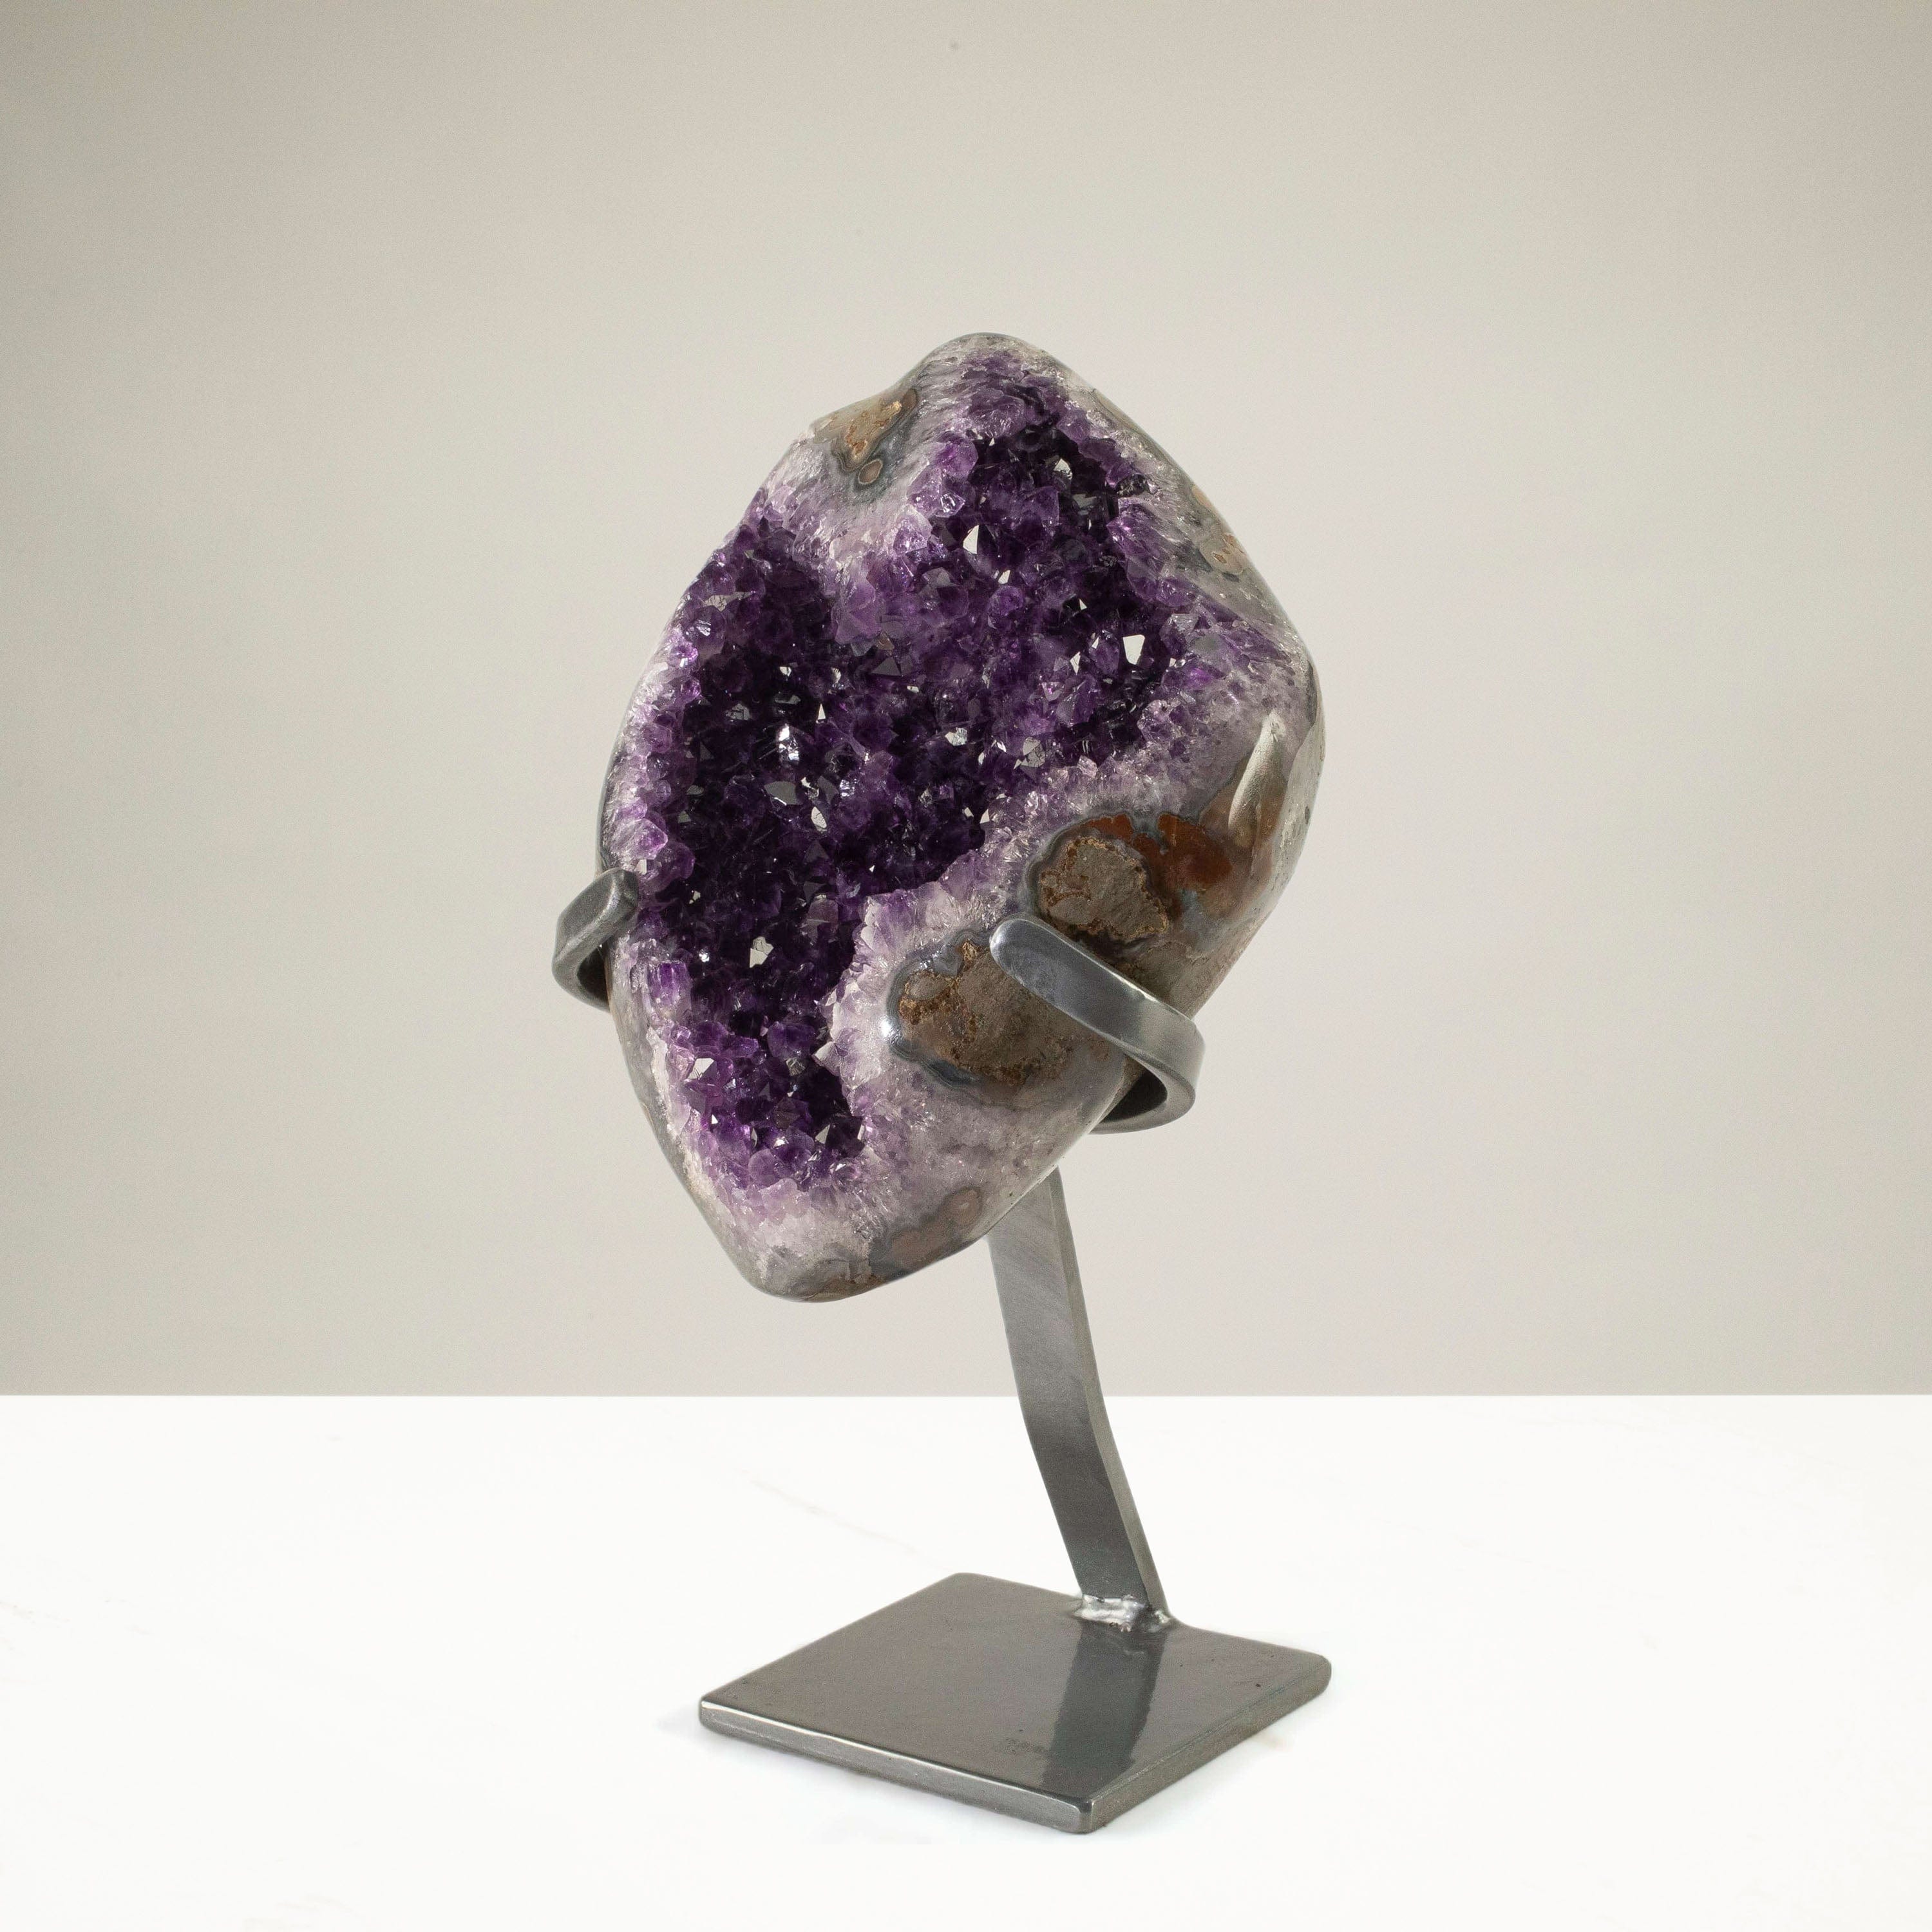 Kalifano Amethyst Uruguayan Amethyst Geode on Custom Stand - 8.8 lbs / 11.5 in. UAG4000.003